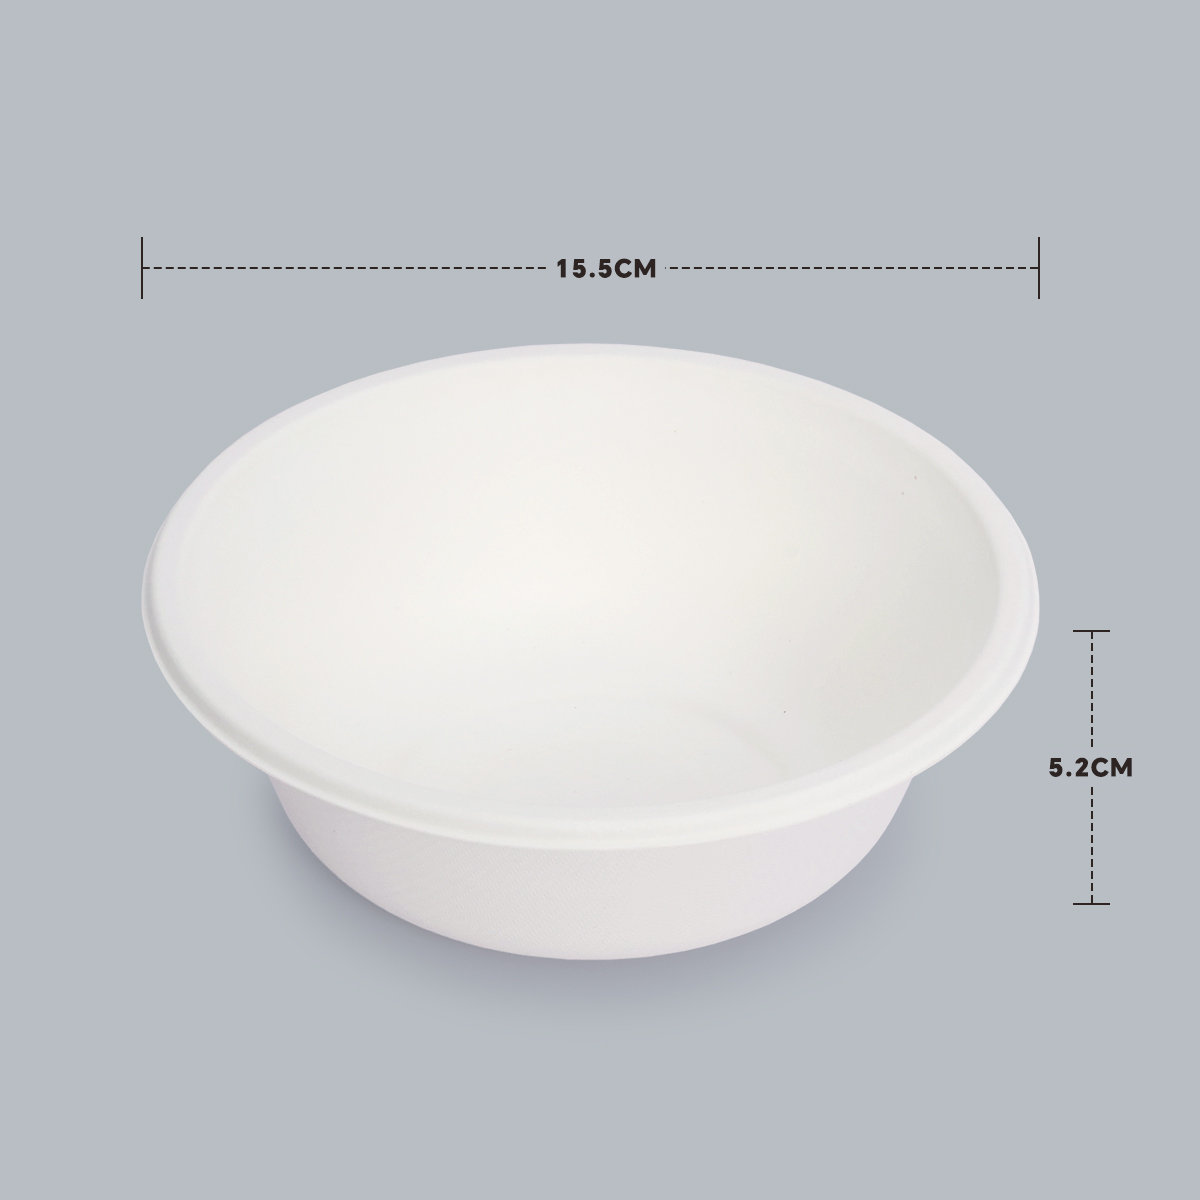 Freezer-safe bowls environmentally friendly tableware Waterproof bowls